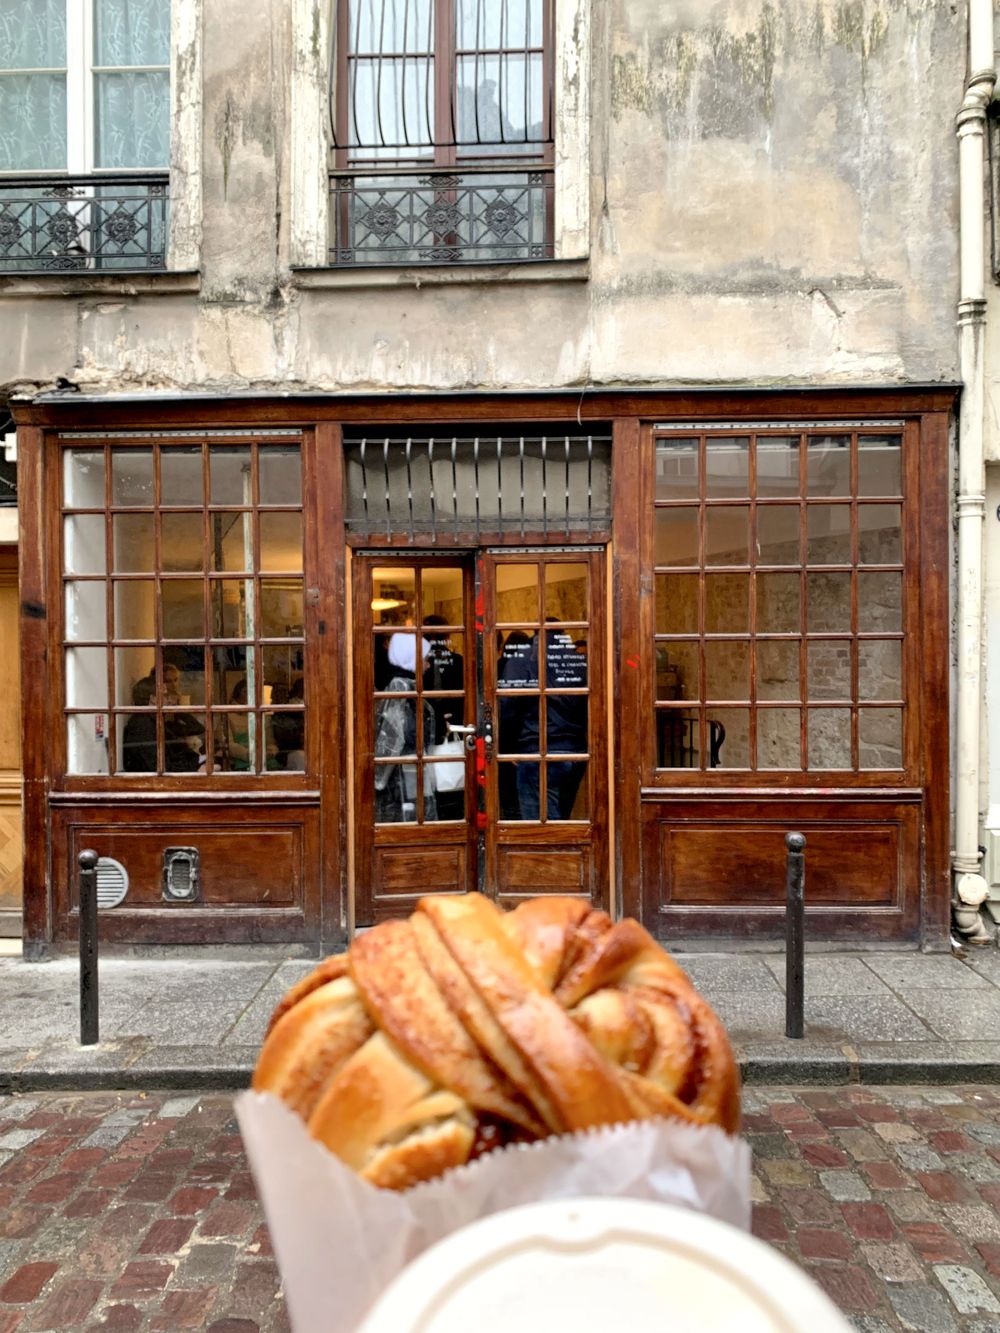 Circus Bakery Cinnamon Rolls, Paris 5th arrondissement